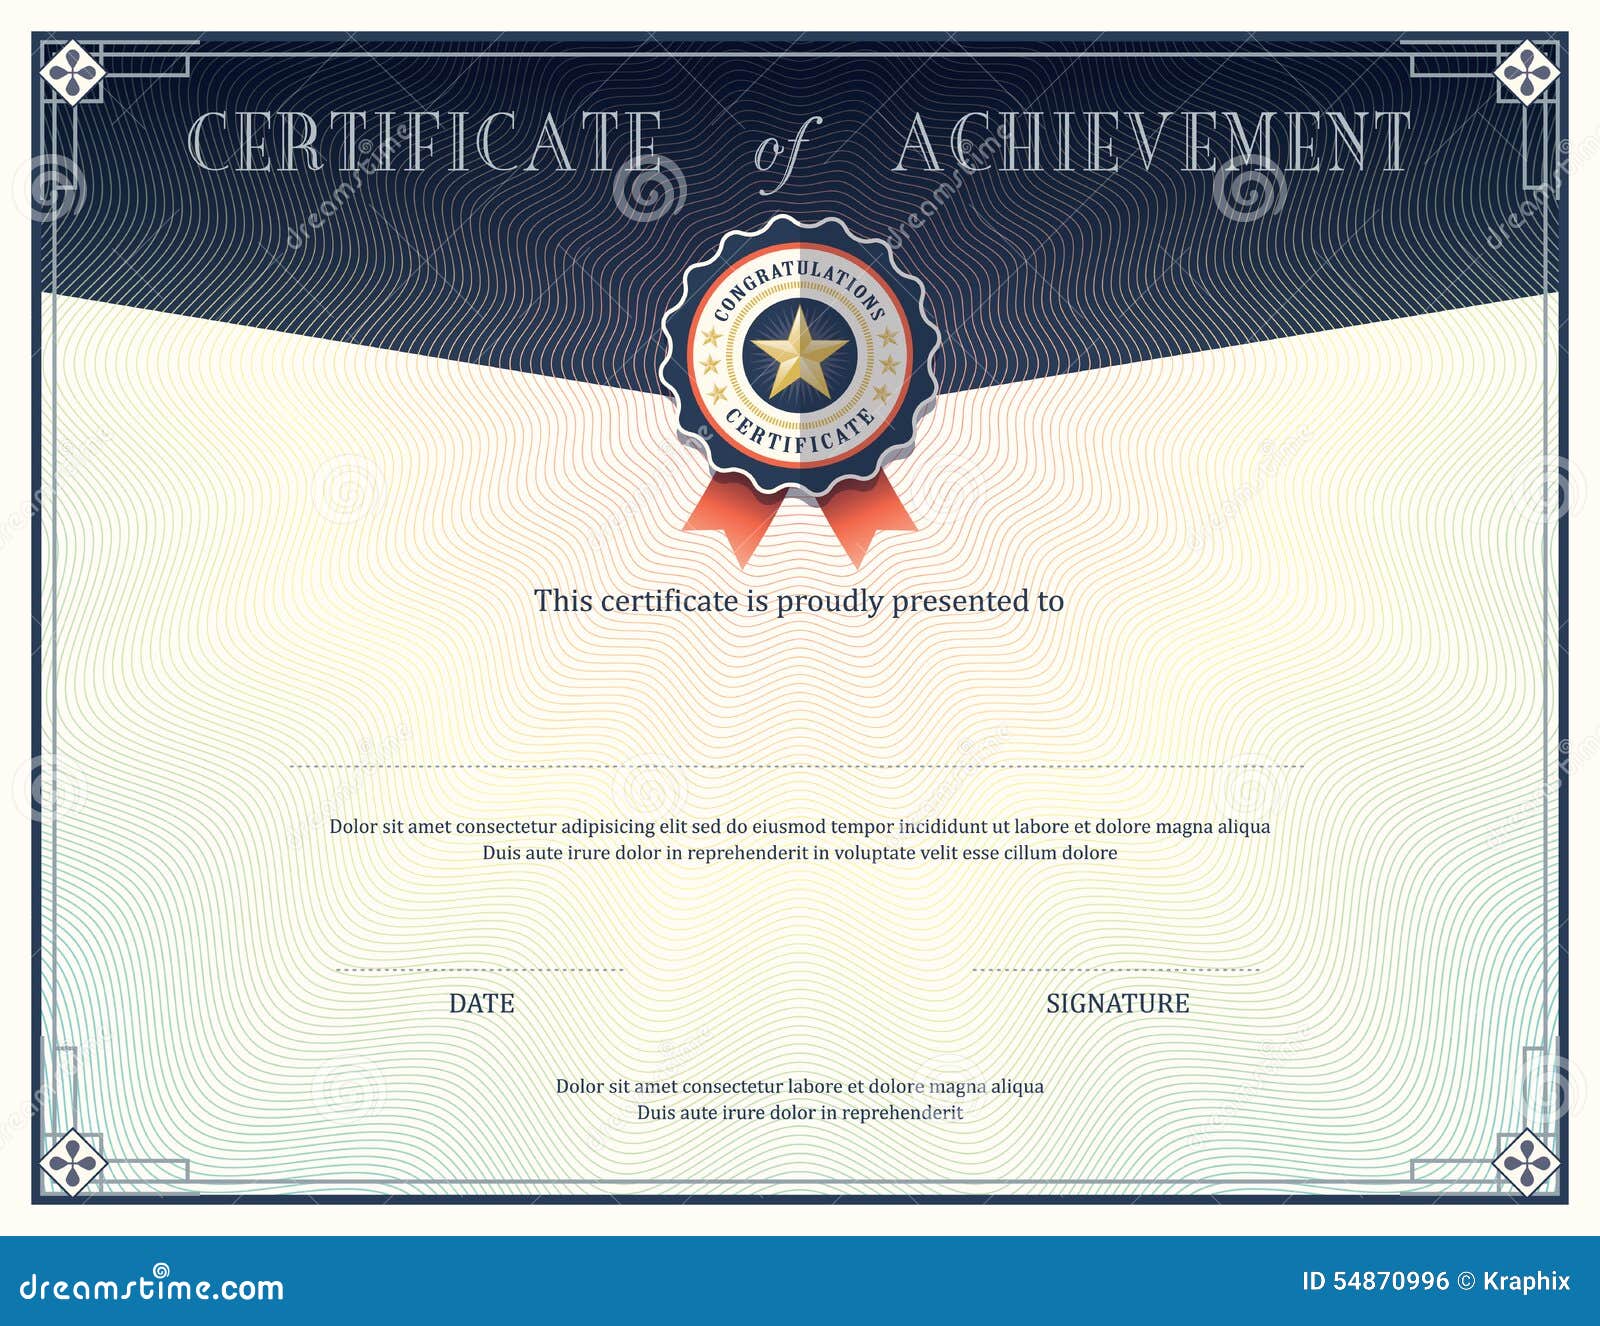 Certificate Of Achievement Design Template Stock Vector Image 54870996